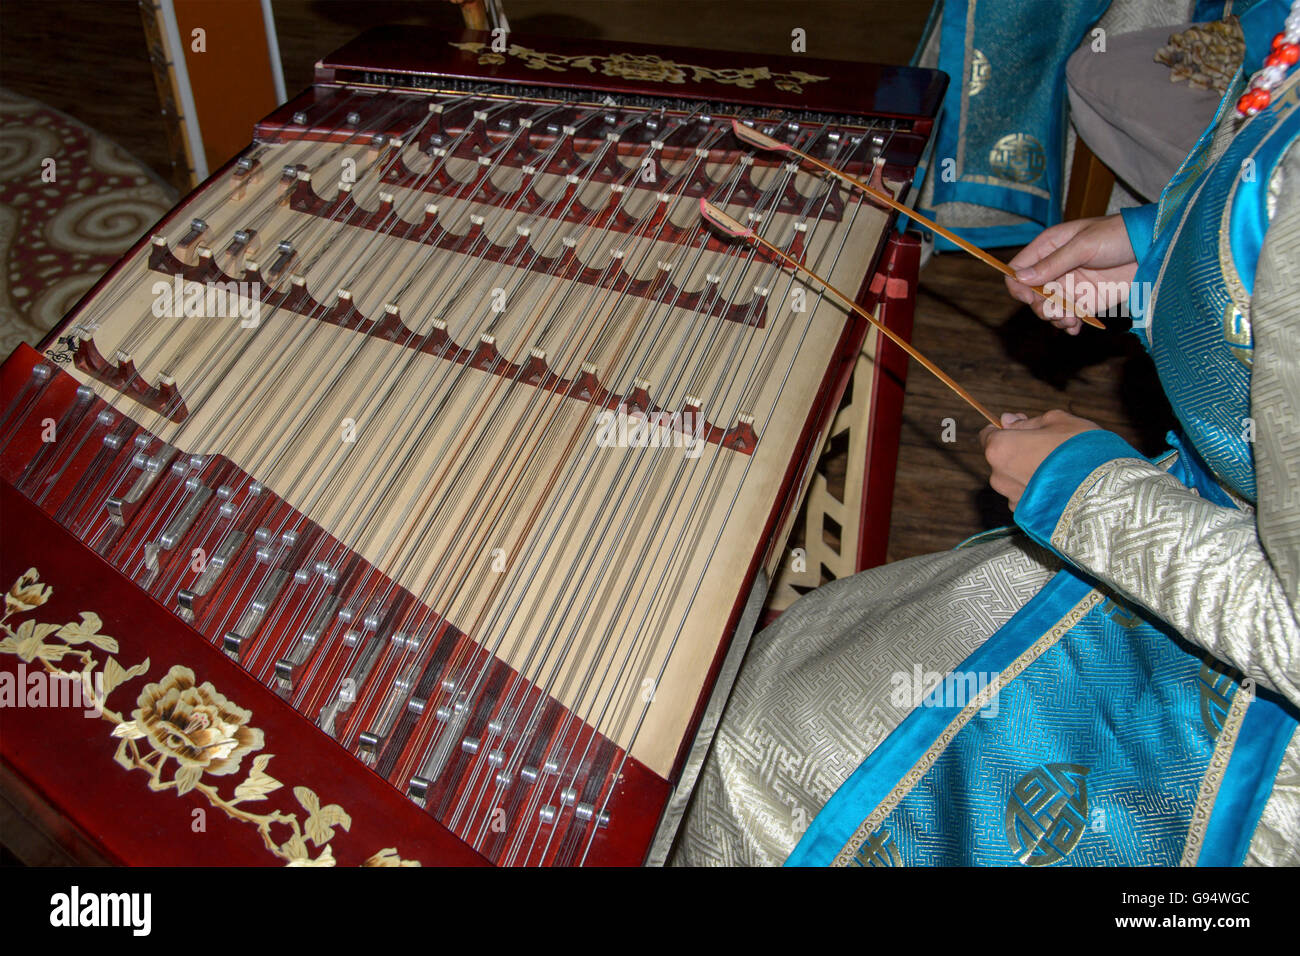 Instrumentos musicales mongoles fotografías e imágenes de alta resolución -  Alamy